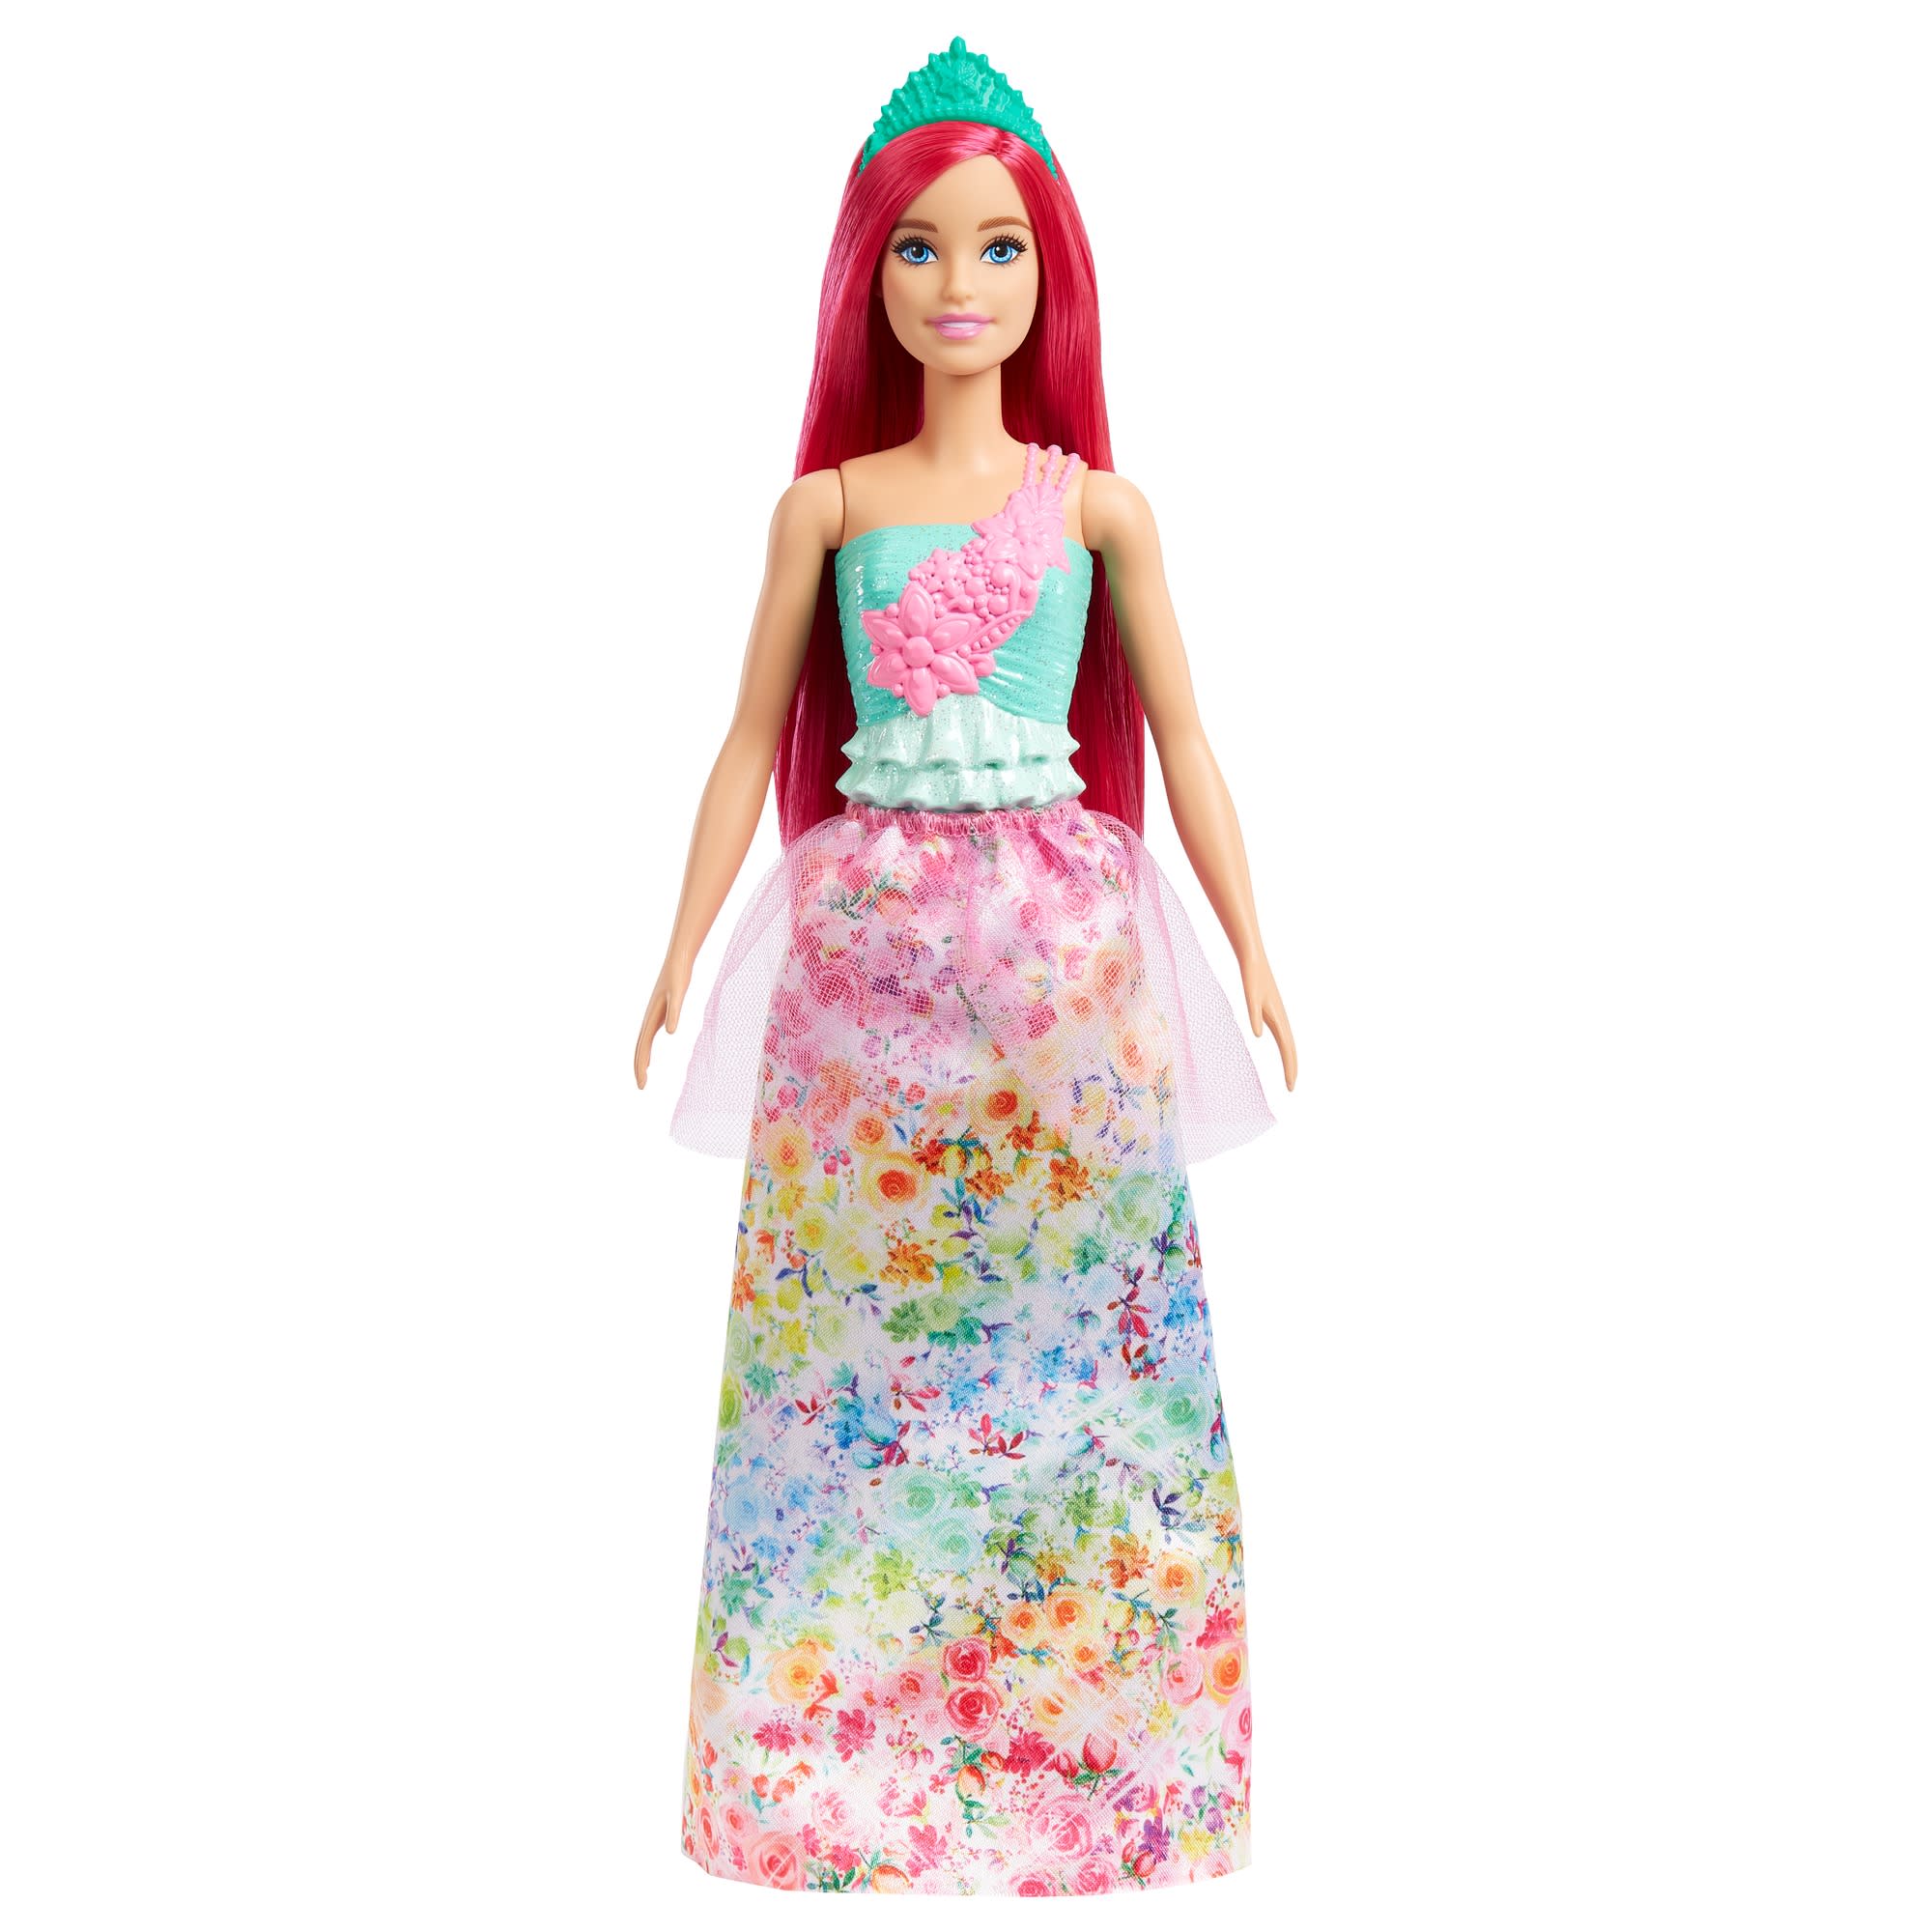 Barbie - Dreamtopia Princess Doll (HGR15)